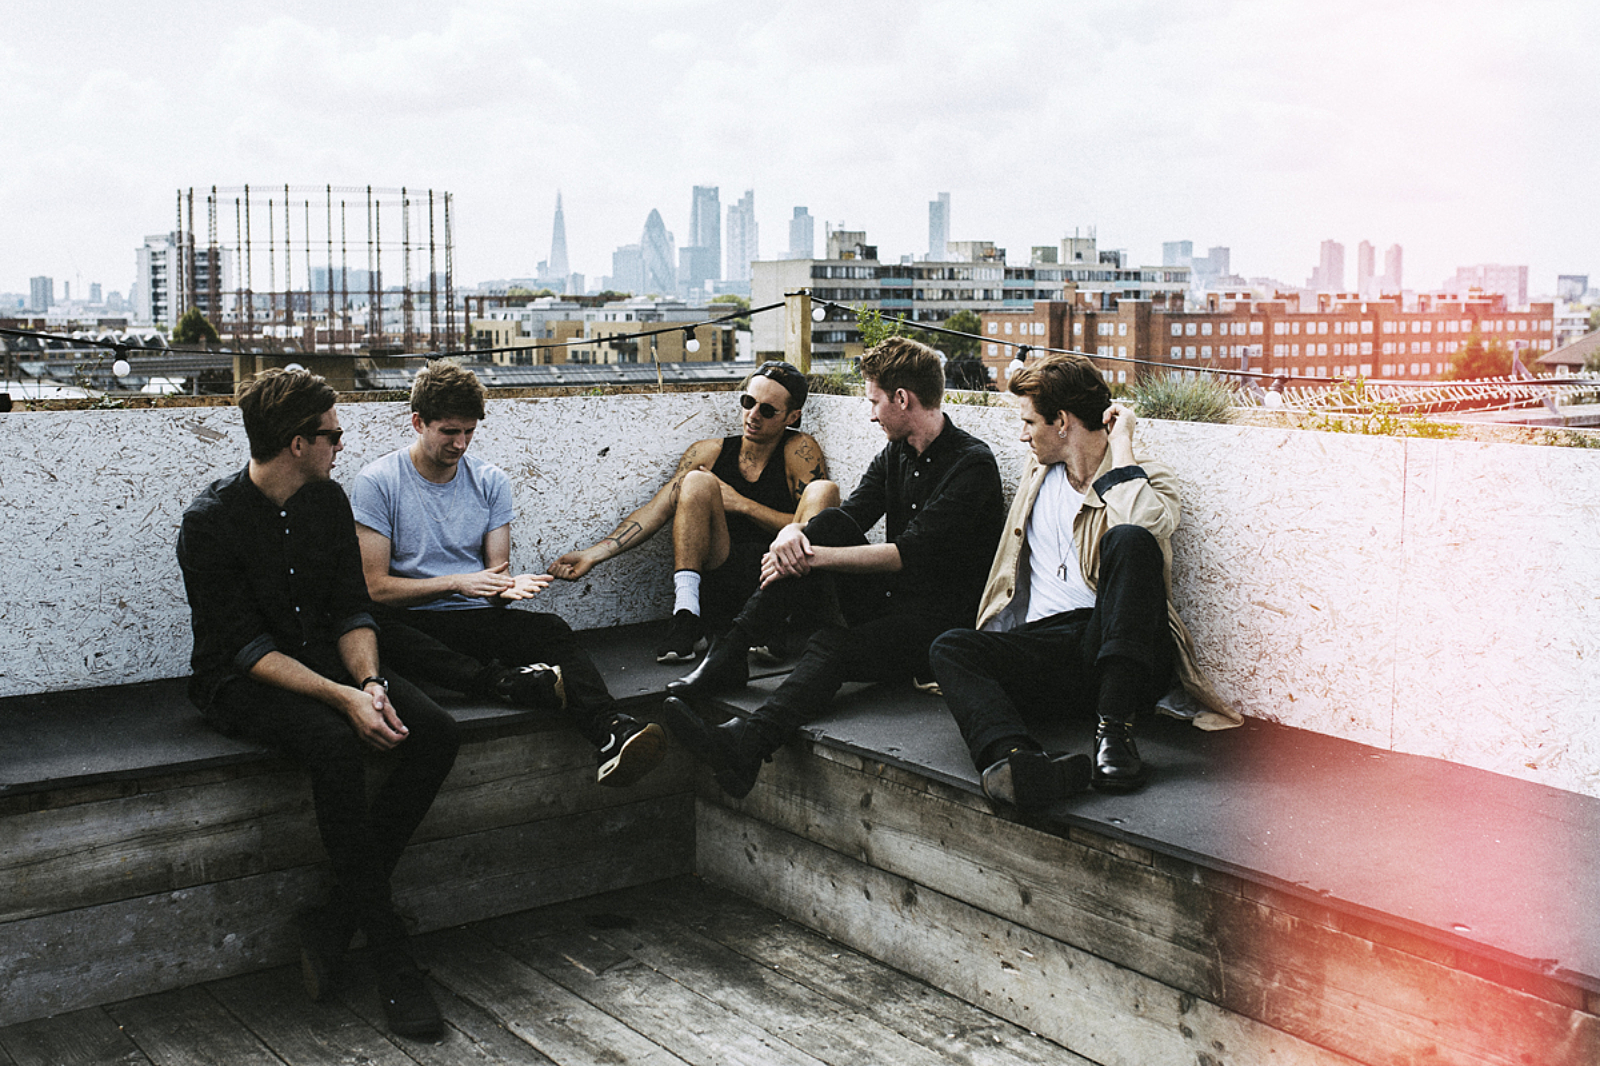 Coasts announce autumn 2015 UK tour